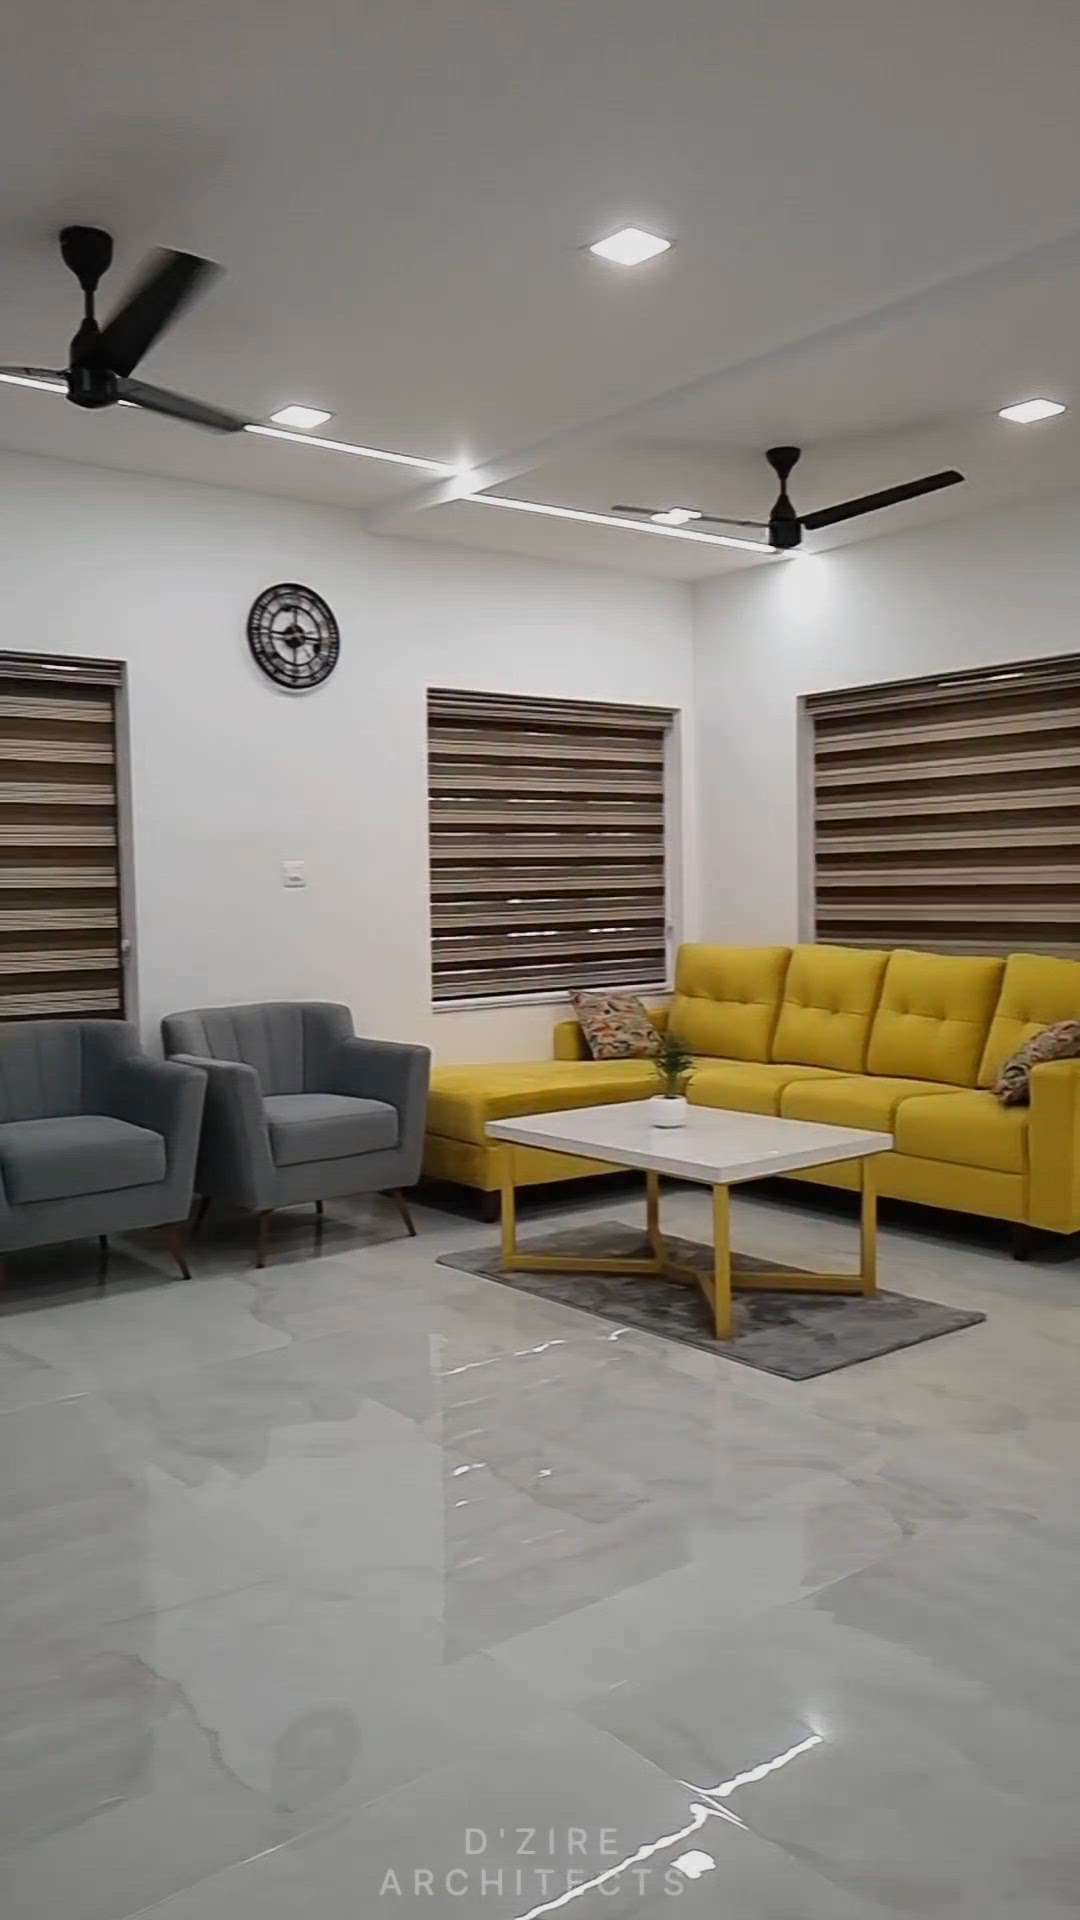 Completed interior project at CUSAT,Kalamassery.
.
Client : Mr Sudheer
Sqft : 1700
Designed by : @dzirearchitects 
 #KeralaStyleHouse #keralastyle #keralaplanners #MrHomeKerala #keralahome#renovation
#HouseDesigns #LivingroomDesigns #LivingRoomSofa #LivingroomTexturePainting #WALL_PANELLING #homerenovation #Carpenter #tvunits #Prayerunit #InteriorDesigner #carporch  #HouseRenovation#dinning #washbasin #washbasinDesign #washroomdesign #washroomdesign #LivingRoomTV #TVStand #tvcabinet #Kollam #Ernakulam #tvm #Pathanamthitta